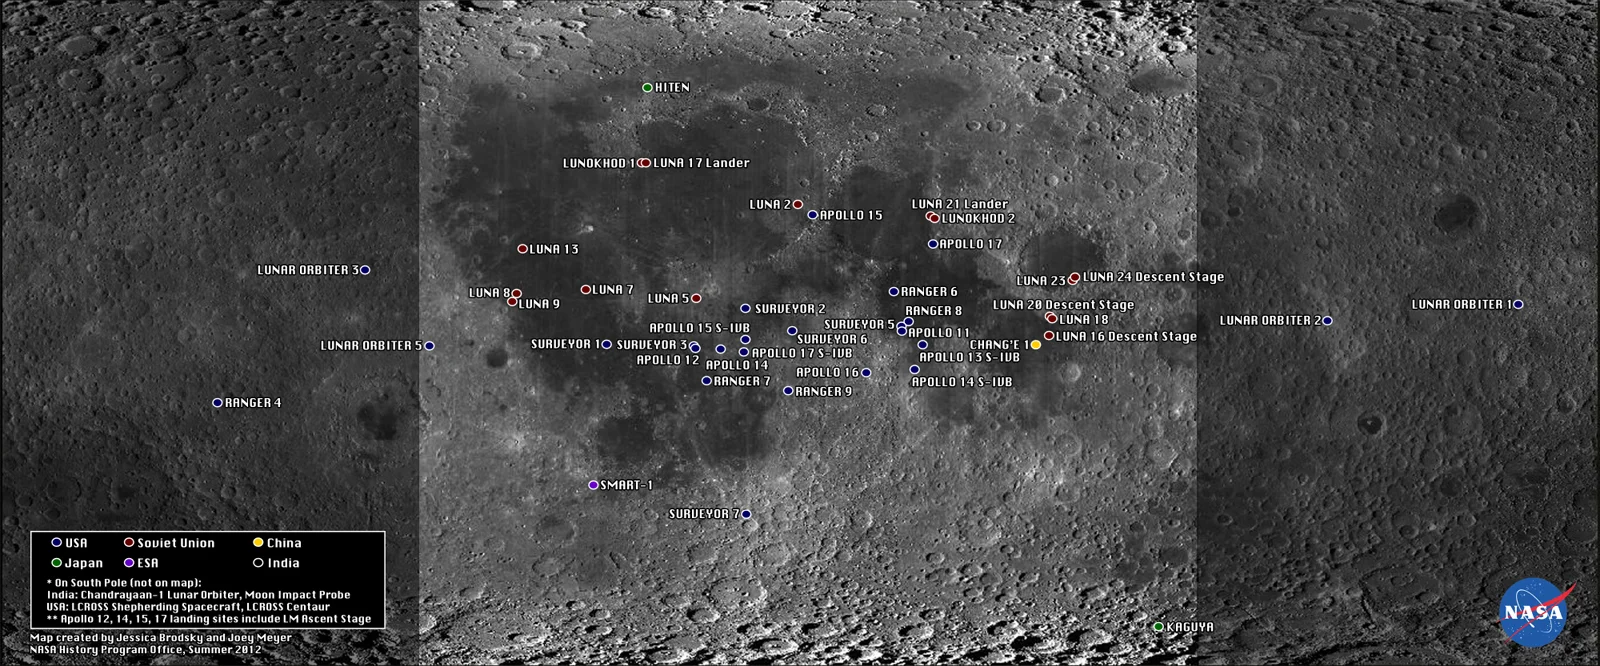 Human-Artifacts-on-the-Moon-NASA-History